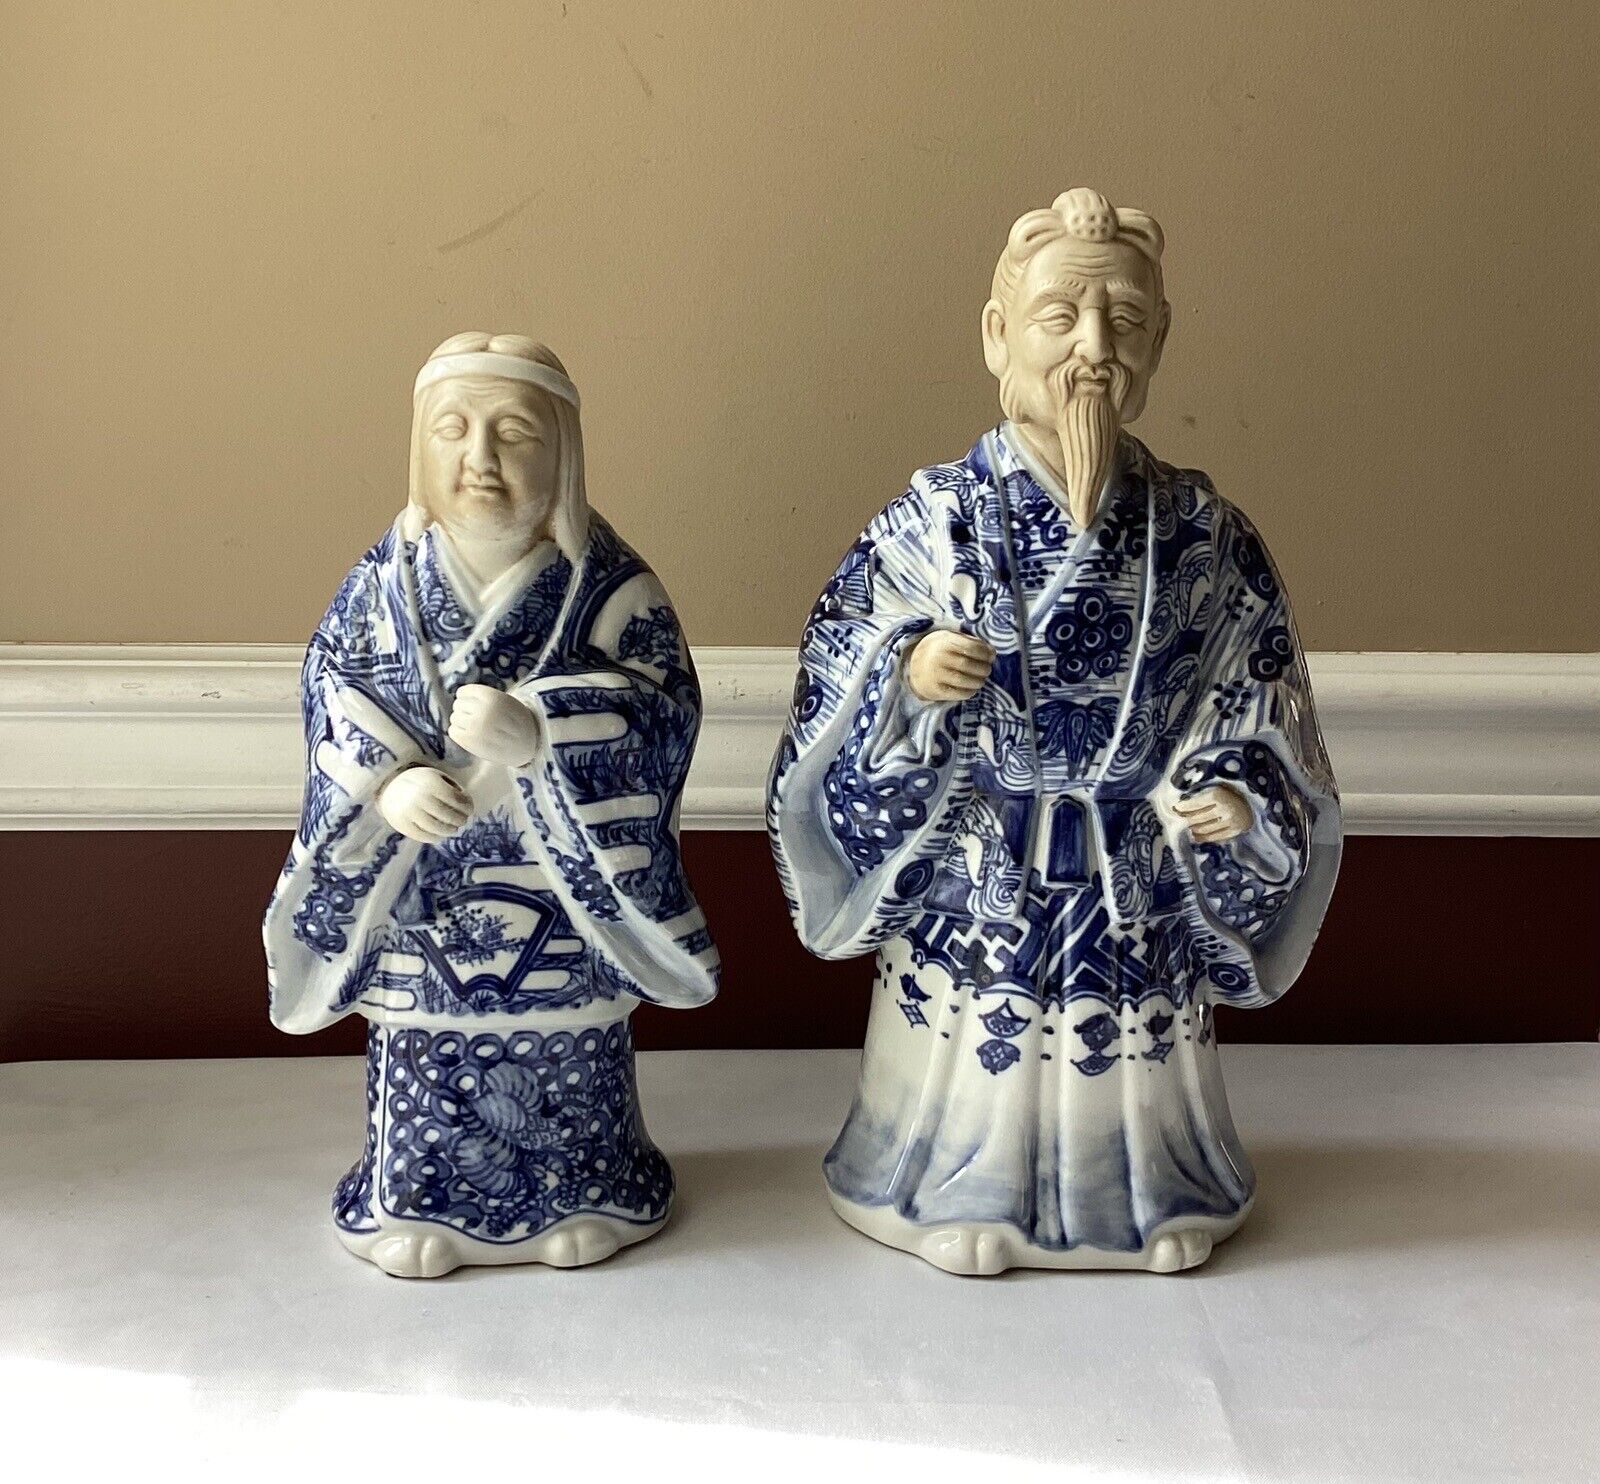 VTG Japanese Kutani Jurojin Porcelain Figurines, The Old Couple from Takasago